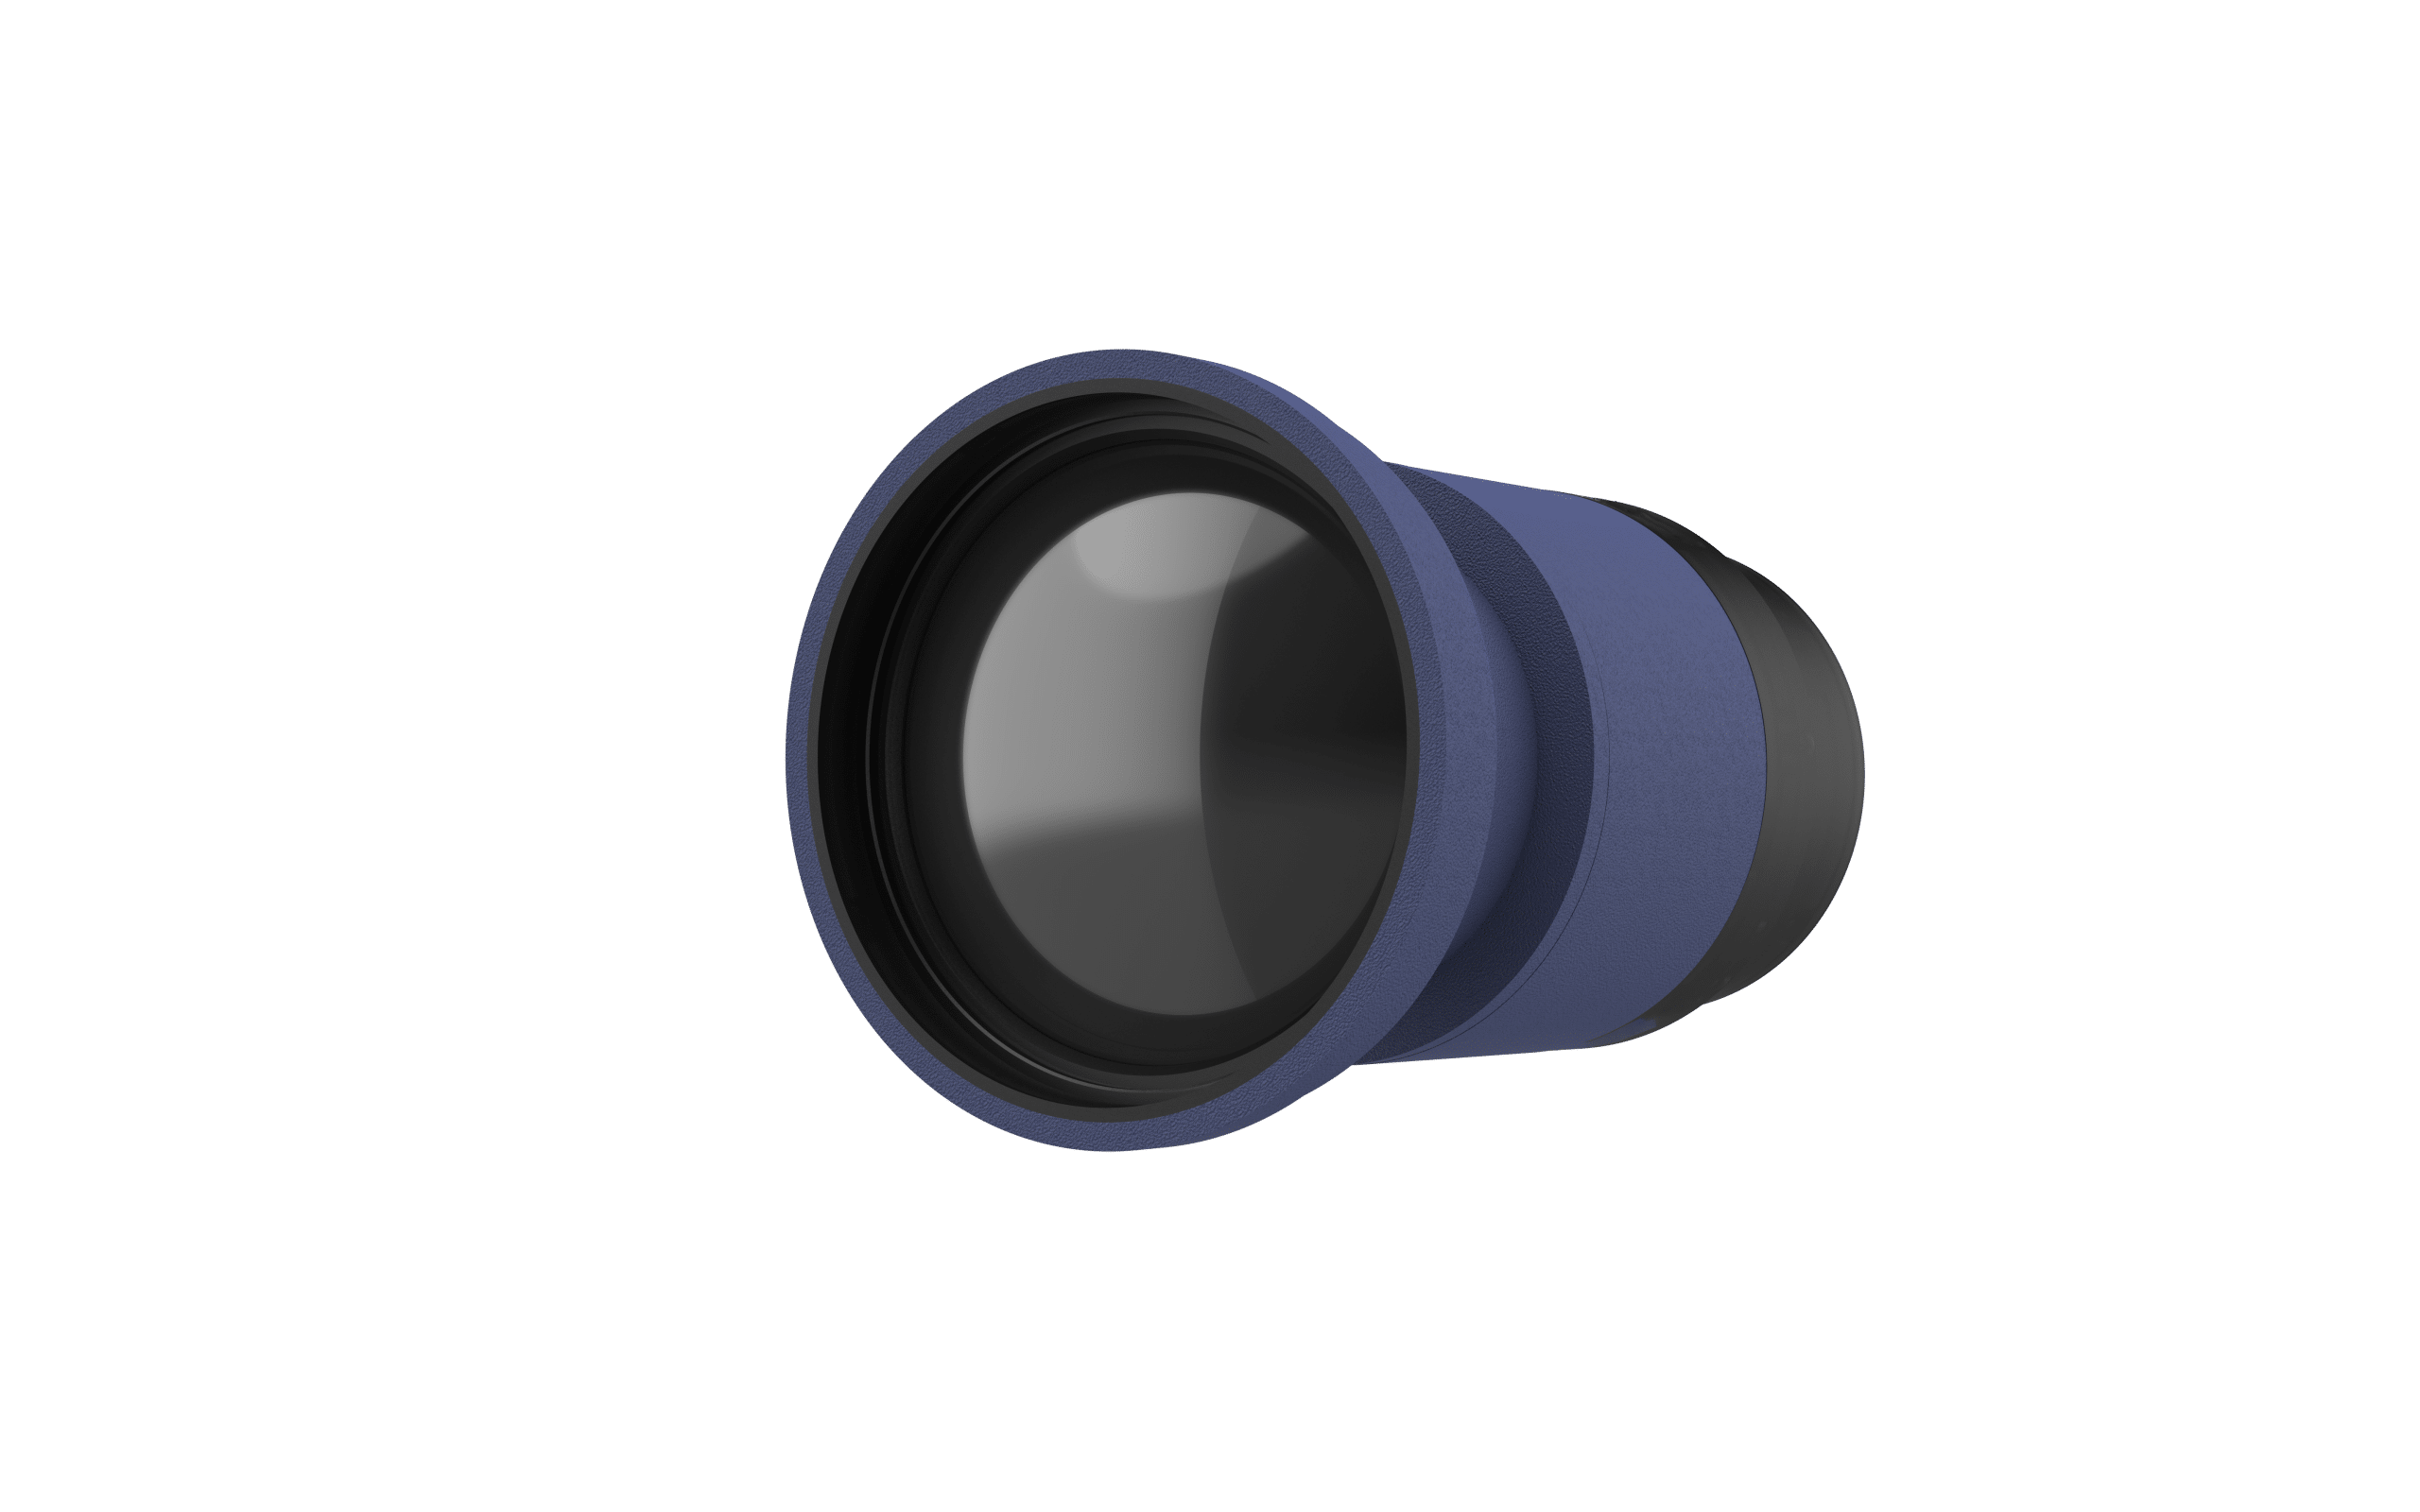 Viper P1280 and P640 handheld thermal camera - dual FOV lens 7 and 25 deg